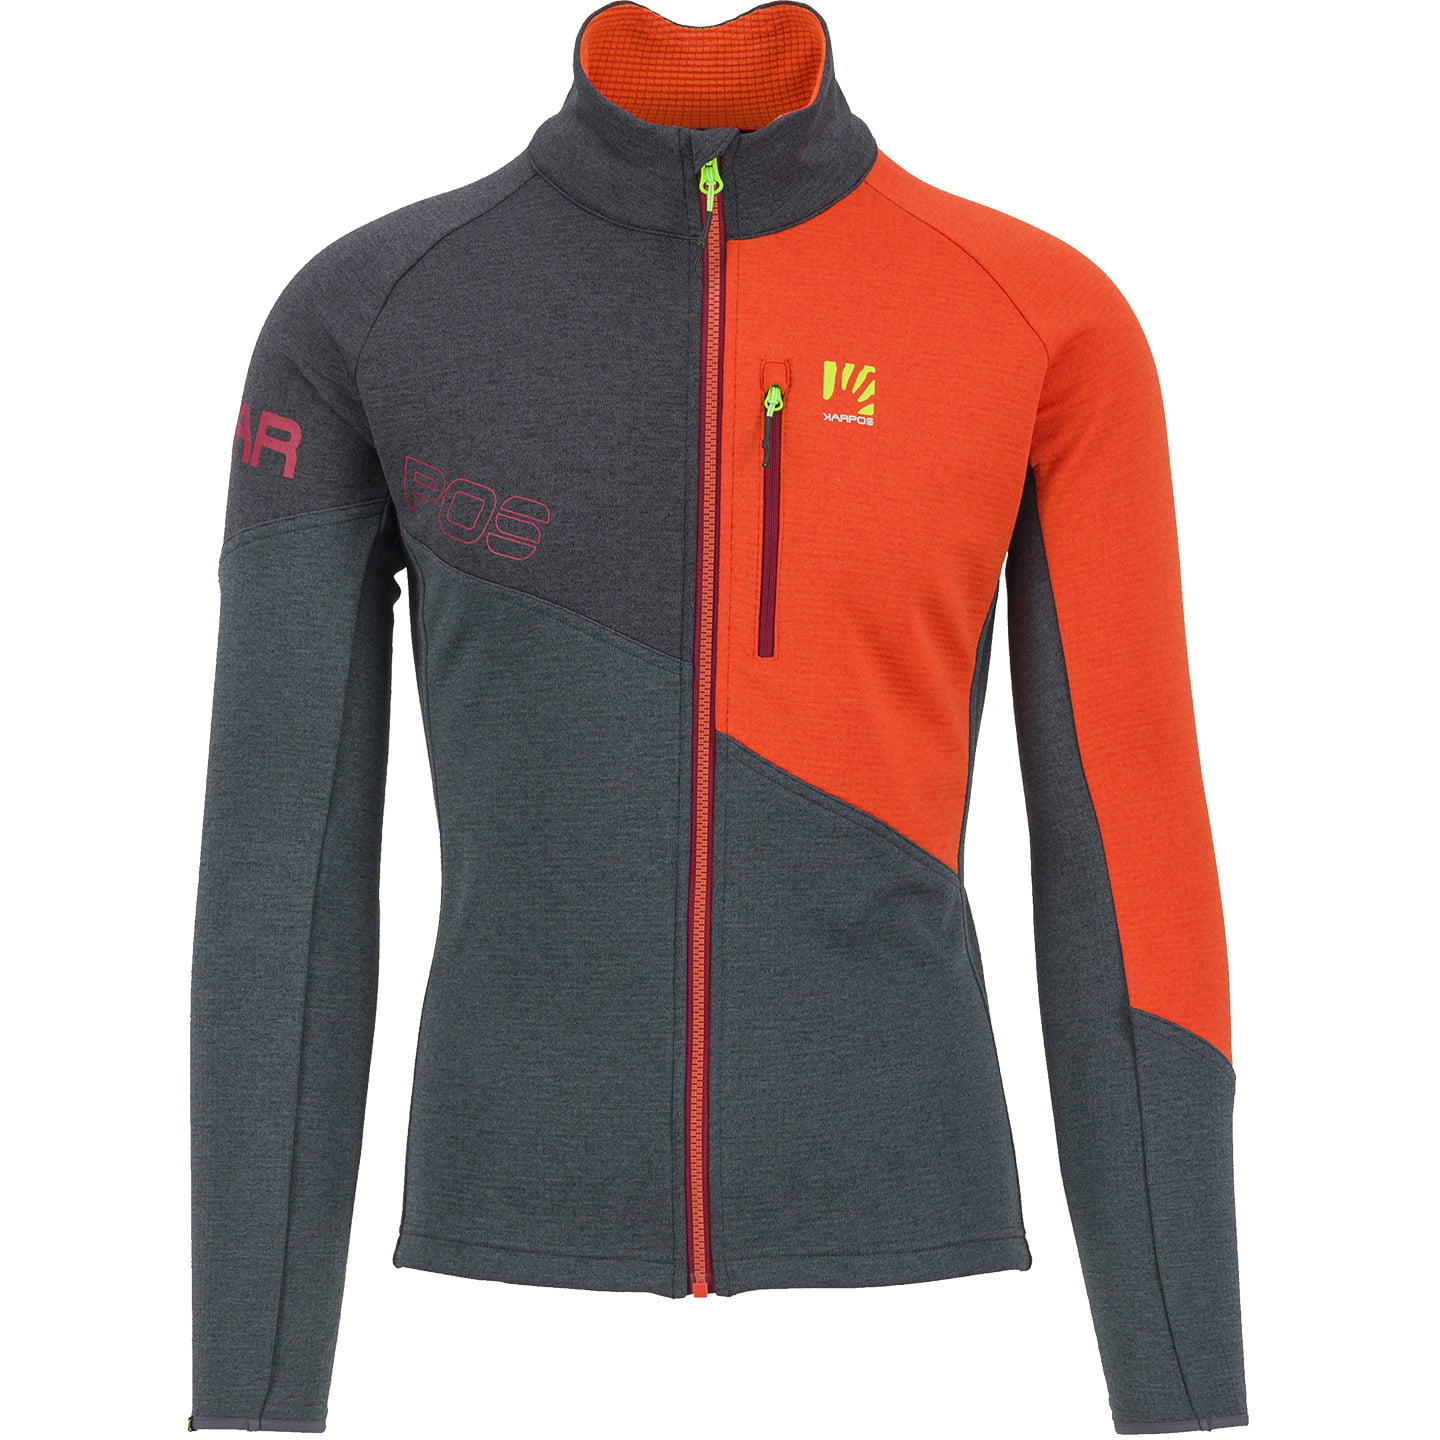 KARPOS Val Viola Fleece Jersey Jacket Jersey / Jacket, for men, size M, Cycle jacket, Cycling clothing